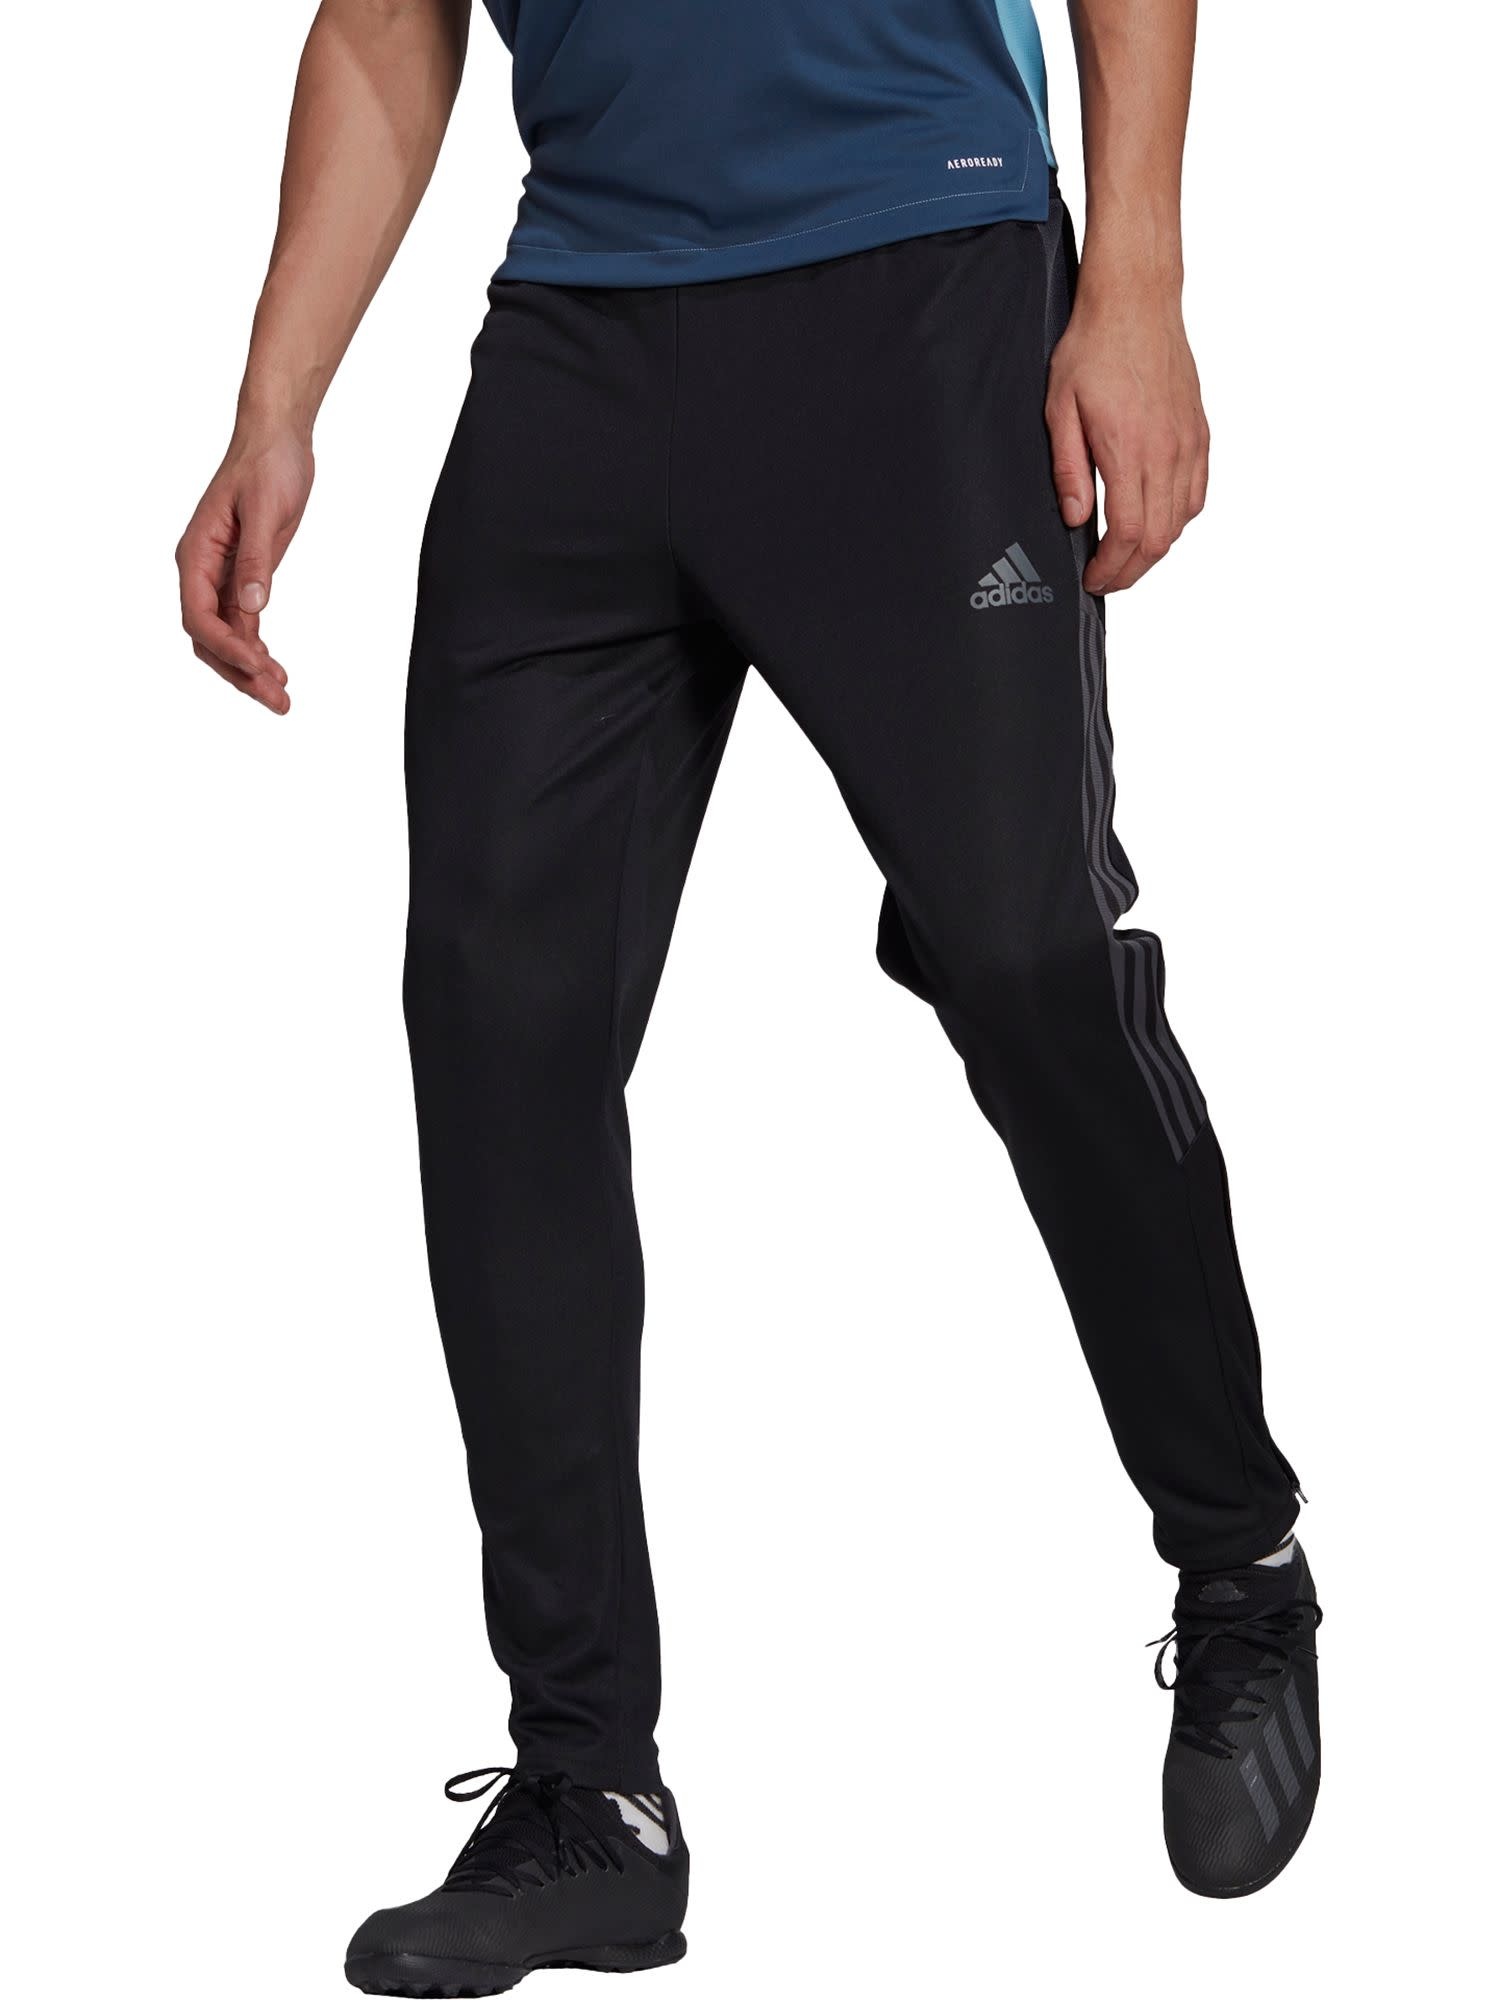 Pebish viool atomair adidas adidas Tiro 21 Performance Training Pants - Black/Grey - Soccerium